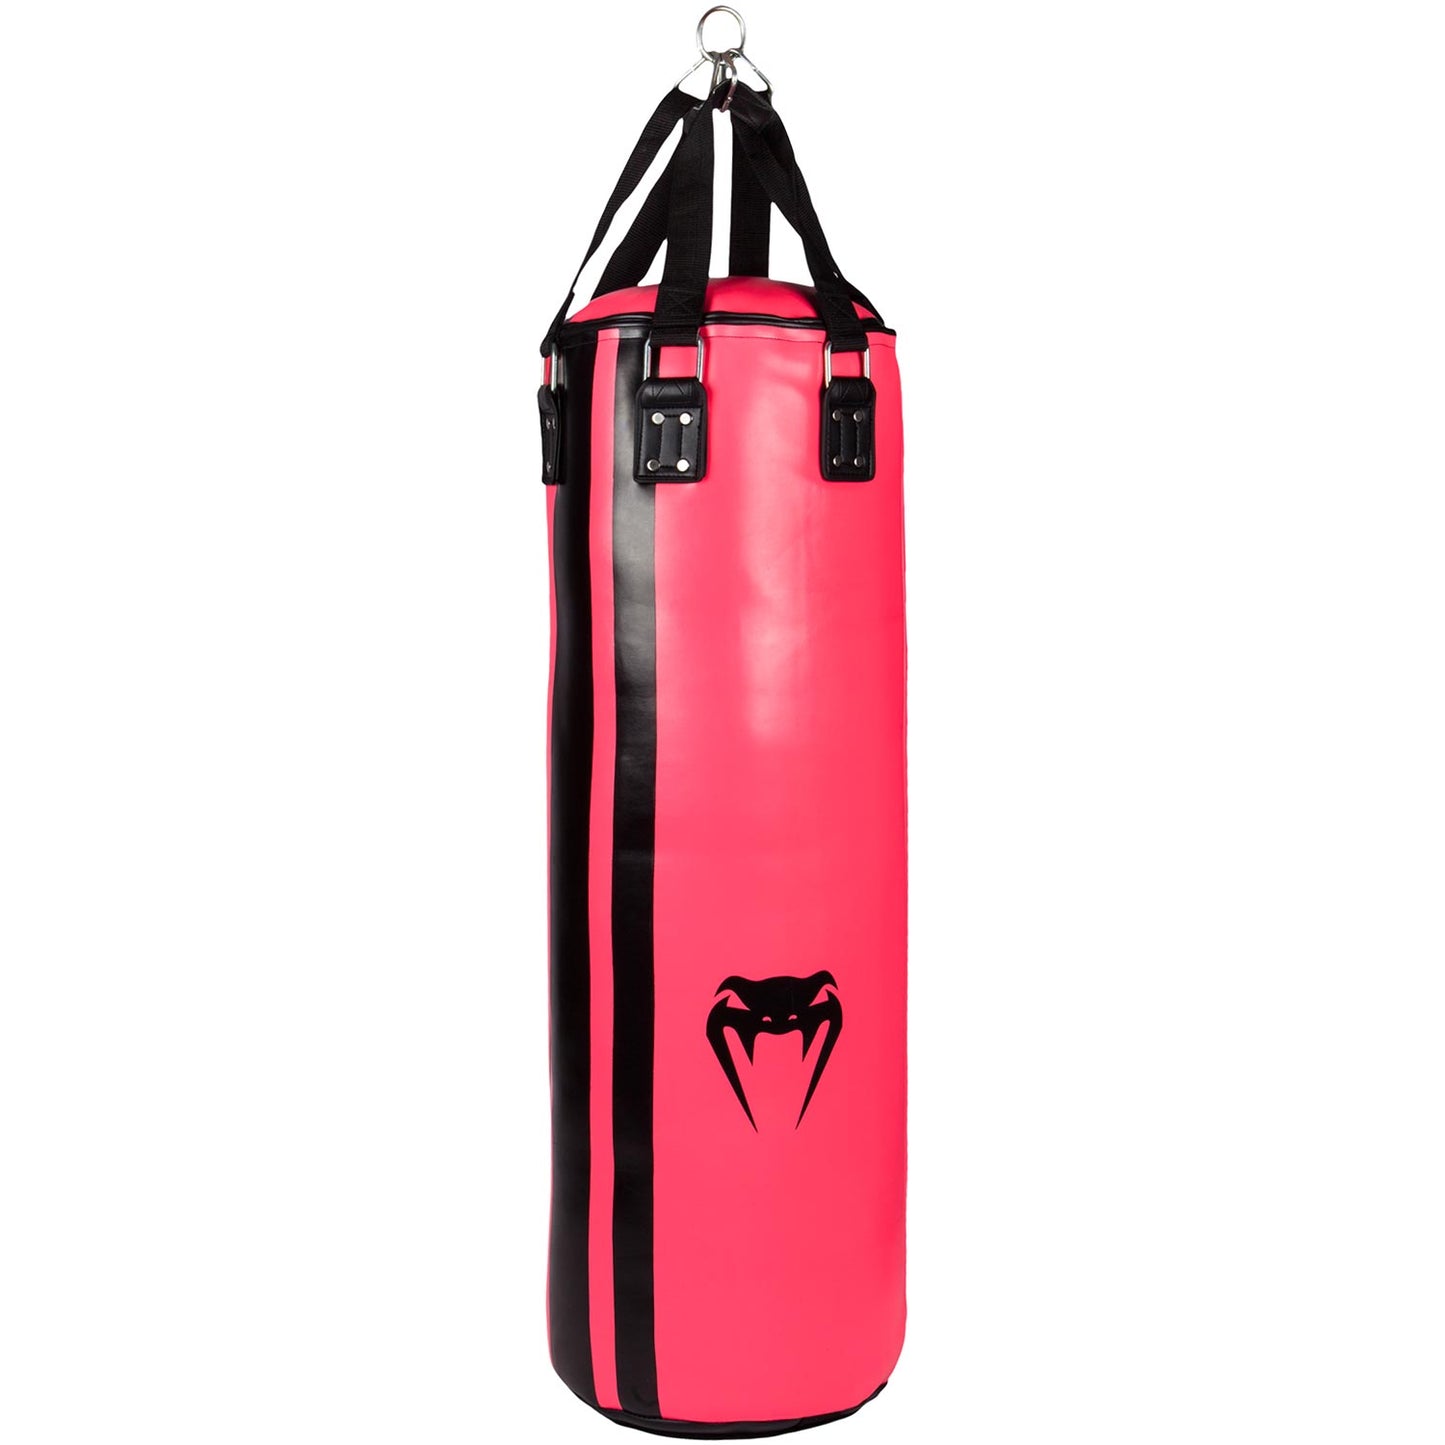 Venum Hurricane Punching Bag - Filled - 130 cm - Black/Pink